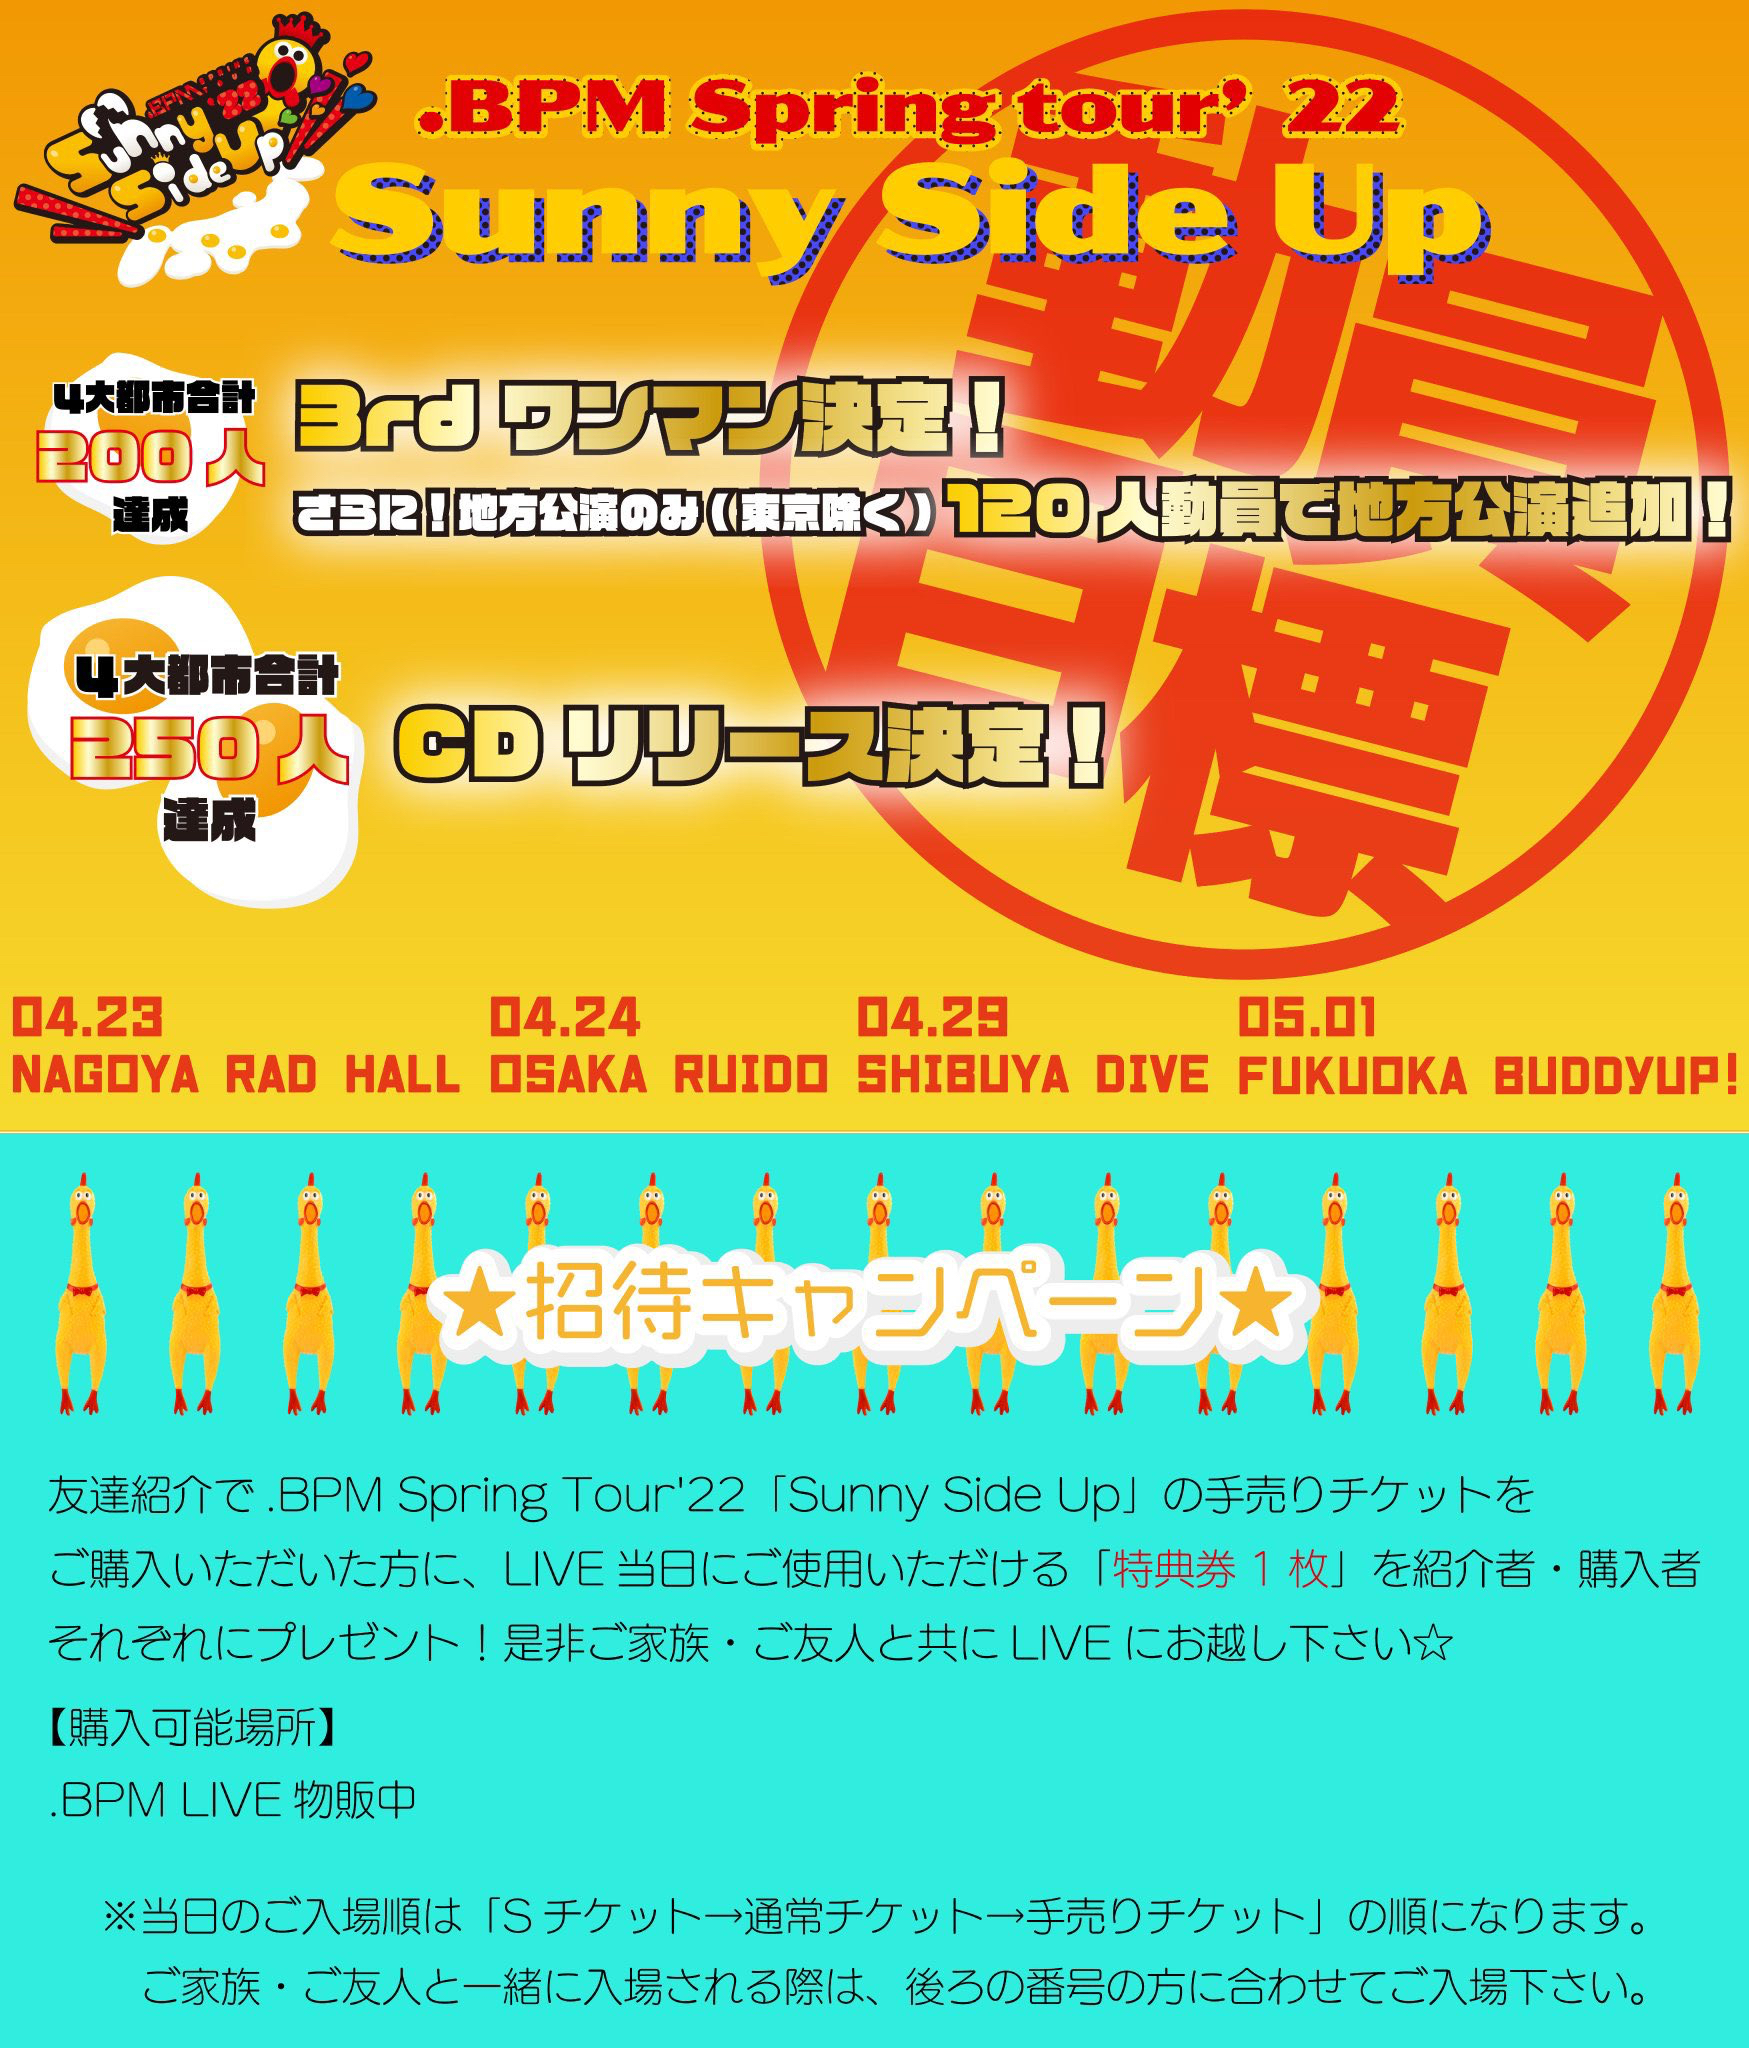 .BPM Spring tour'22 Sunny Side Up